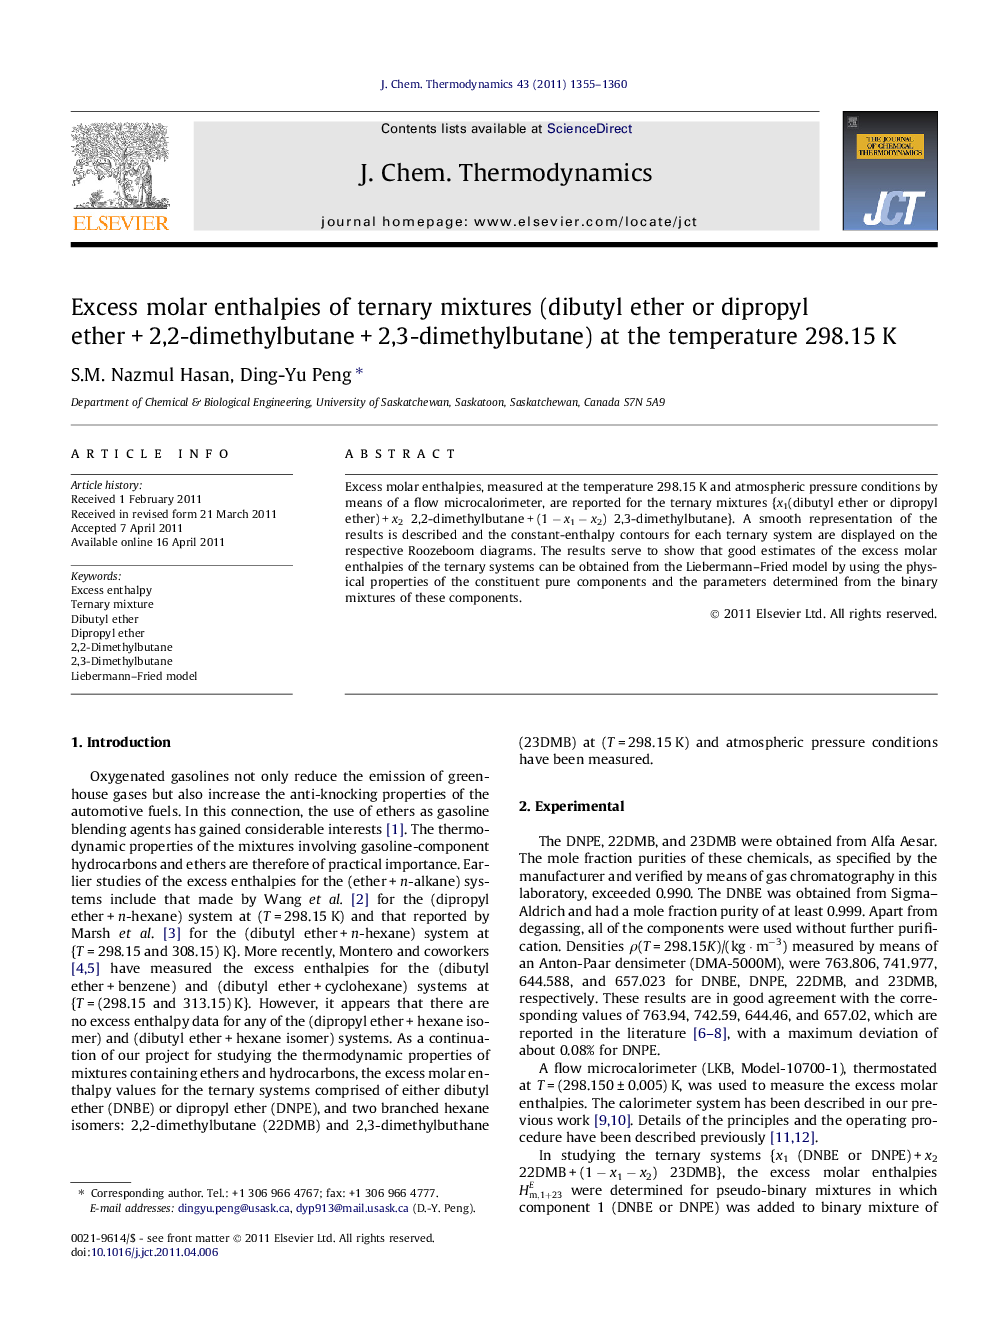 Excess molar enthalpies of ternary mixtures (dibutyl ether or dipropyl ether + 2,2-dimethylbutane + 2,3-dimethylbutane) at the temperature 298.15 K